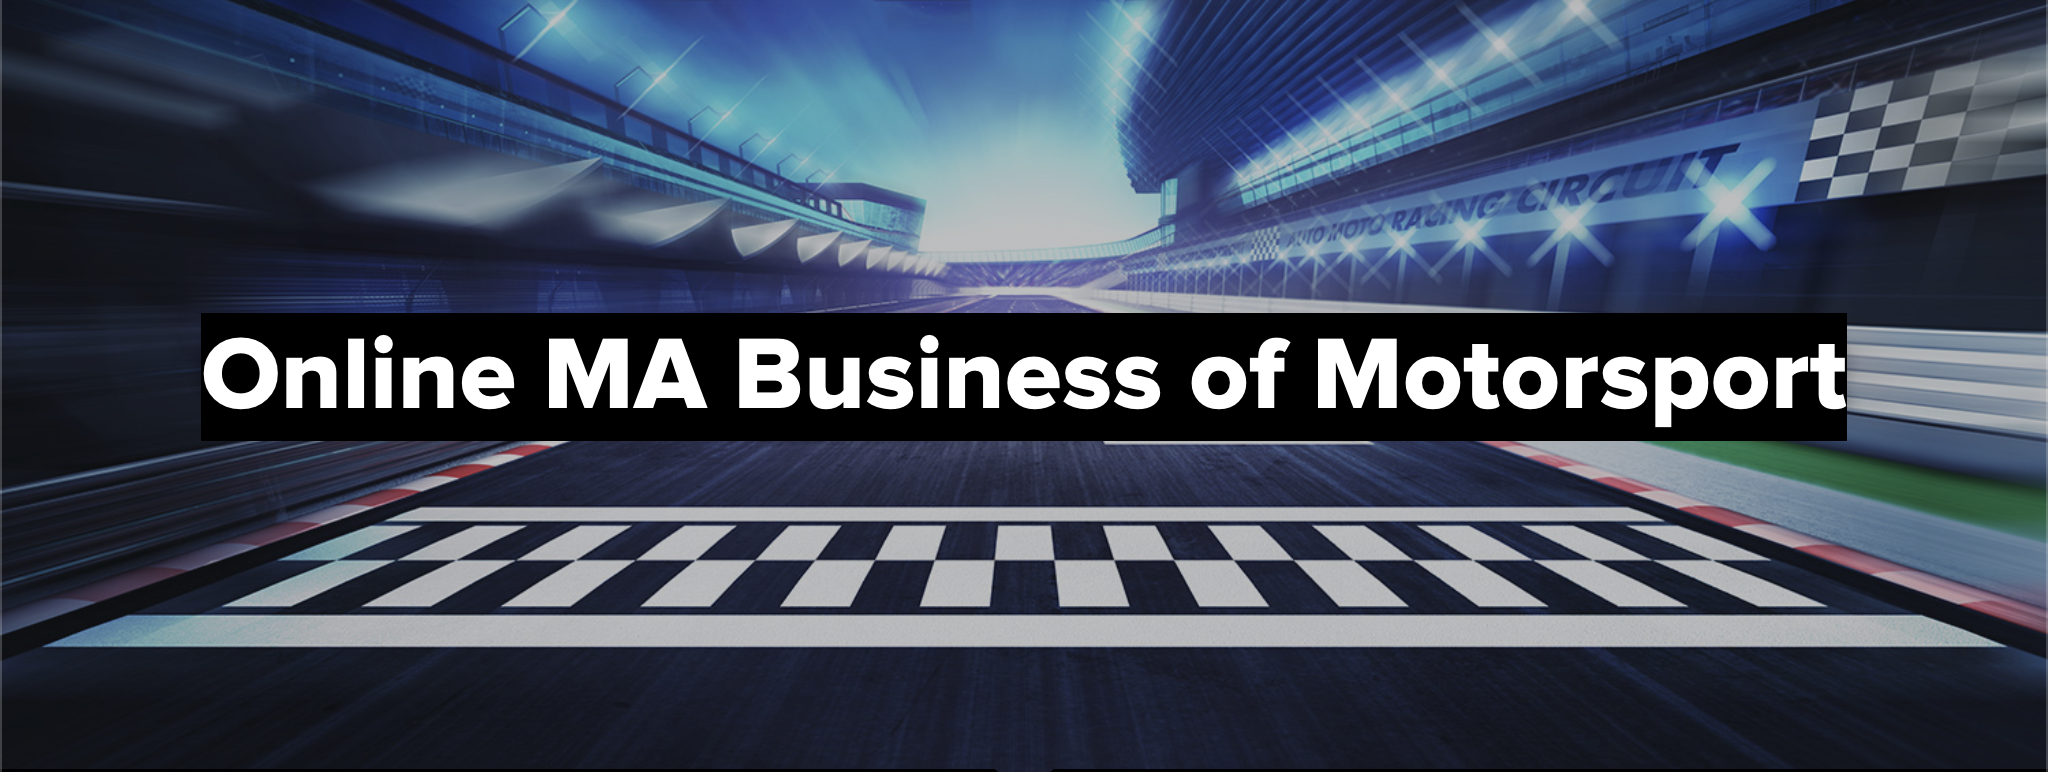 Online MA Business of Motorsport